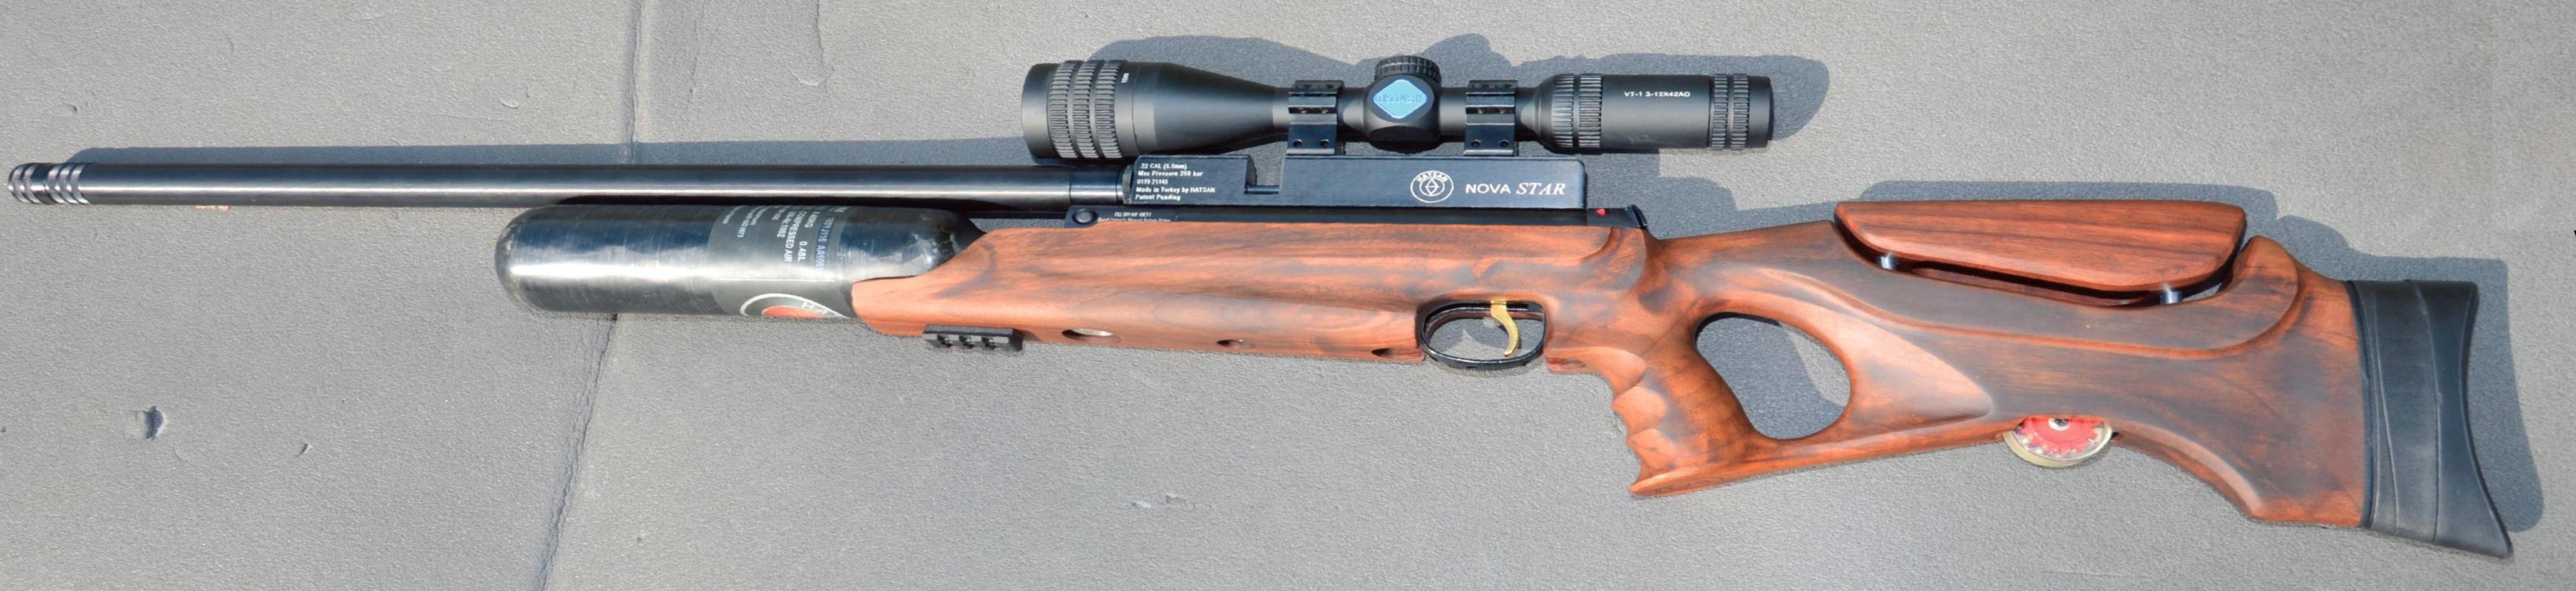 Milbro 4-16x50AOEG Scope Target Air Rifles Country Hunting Shooting 